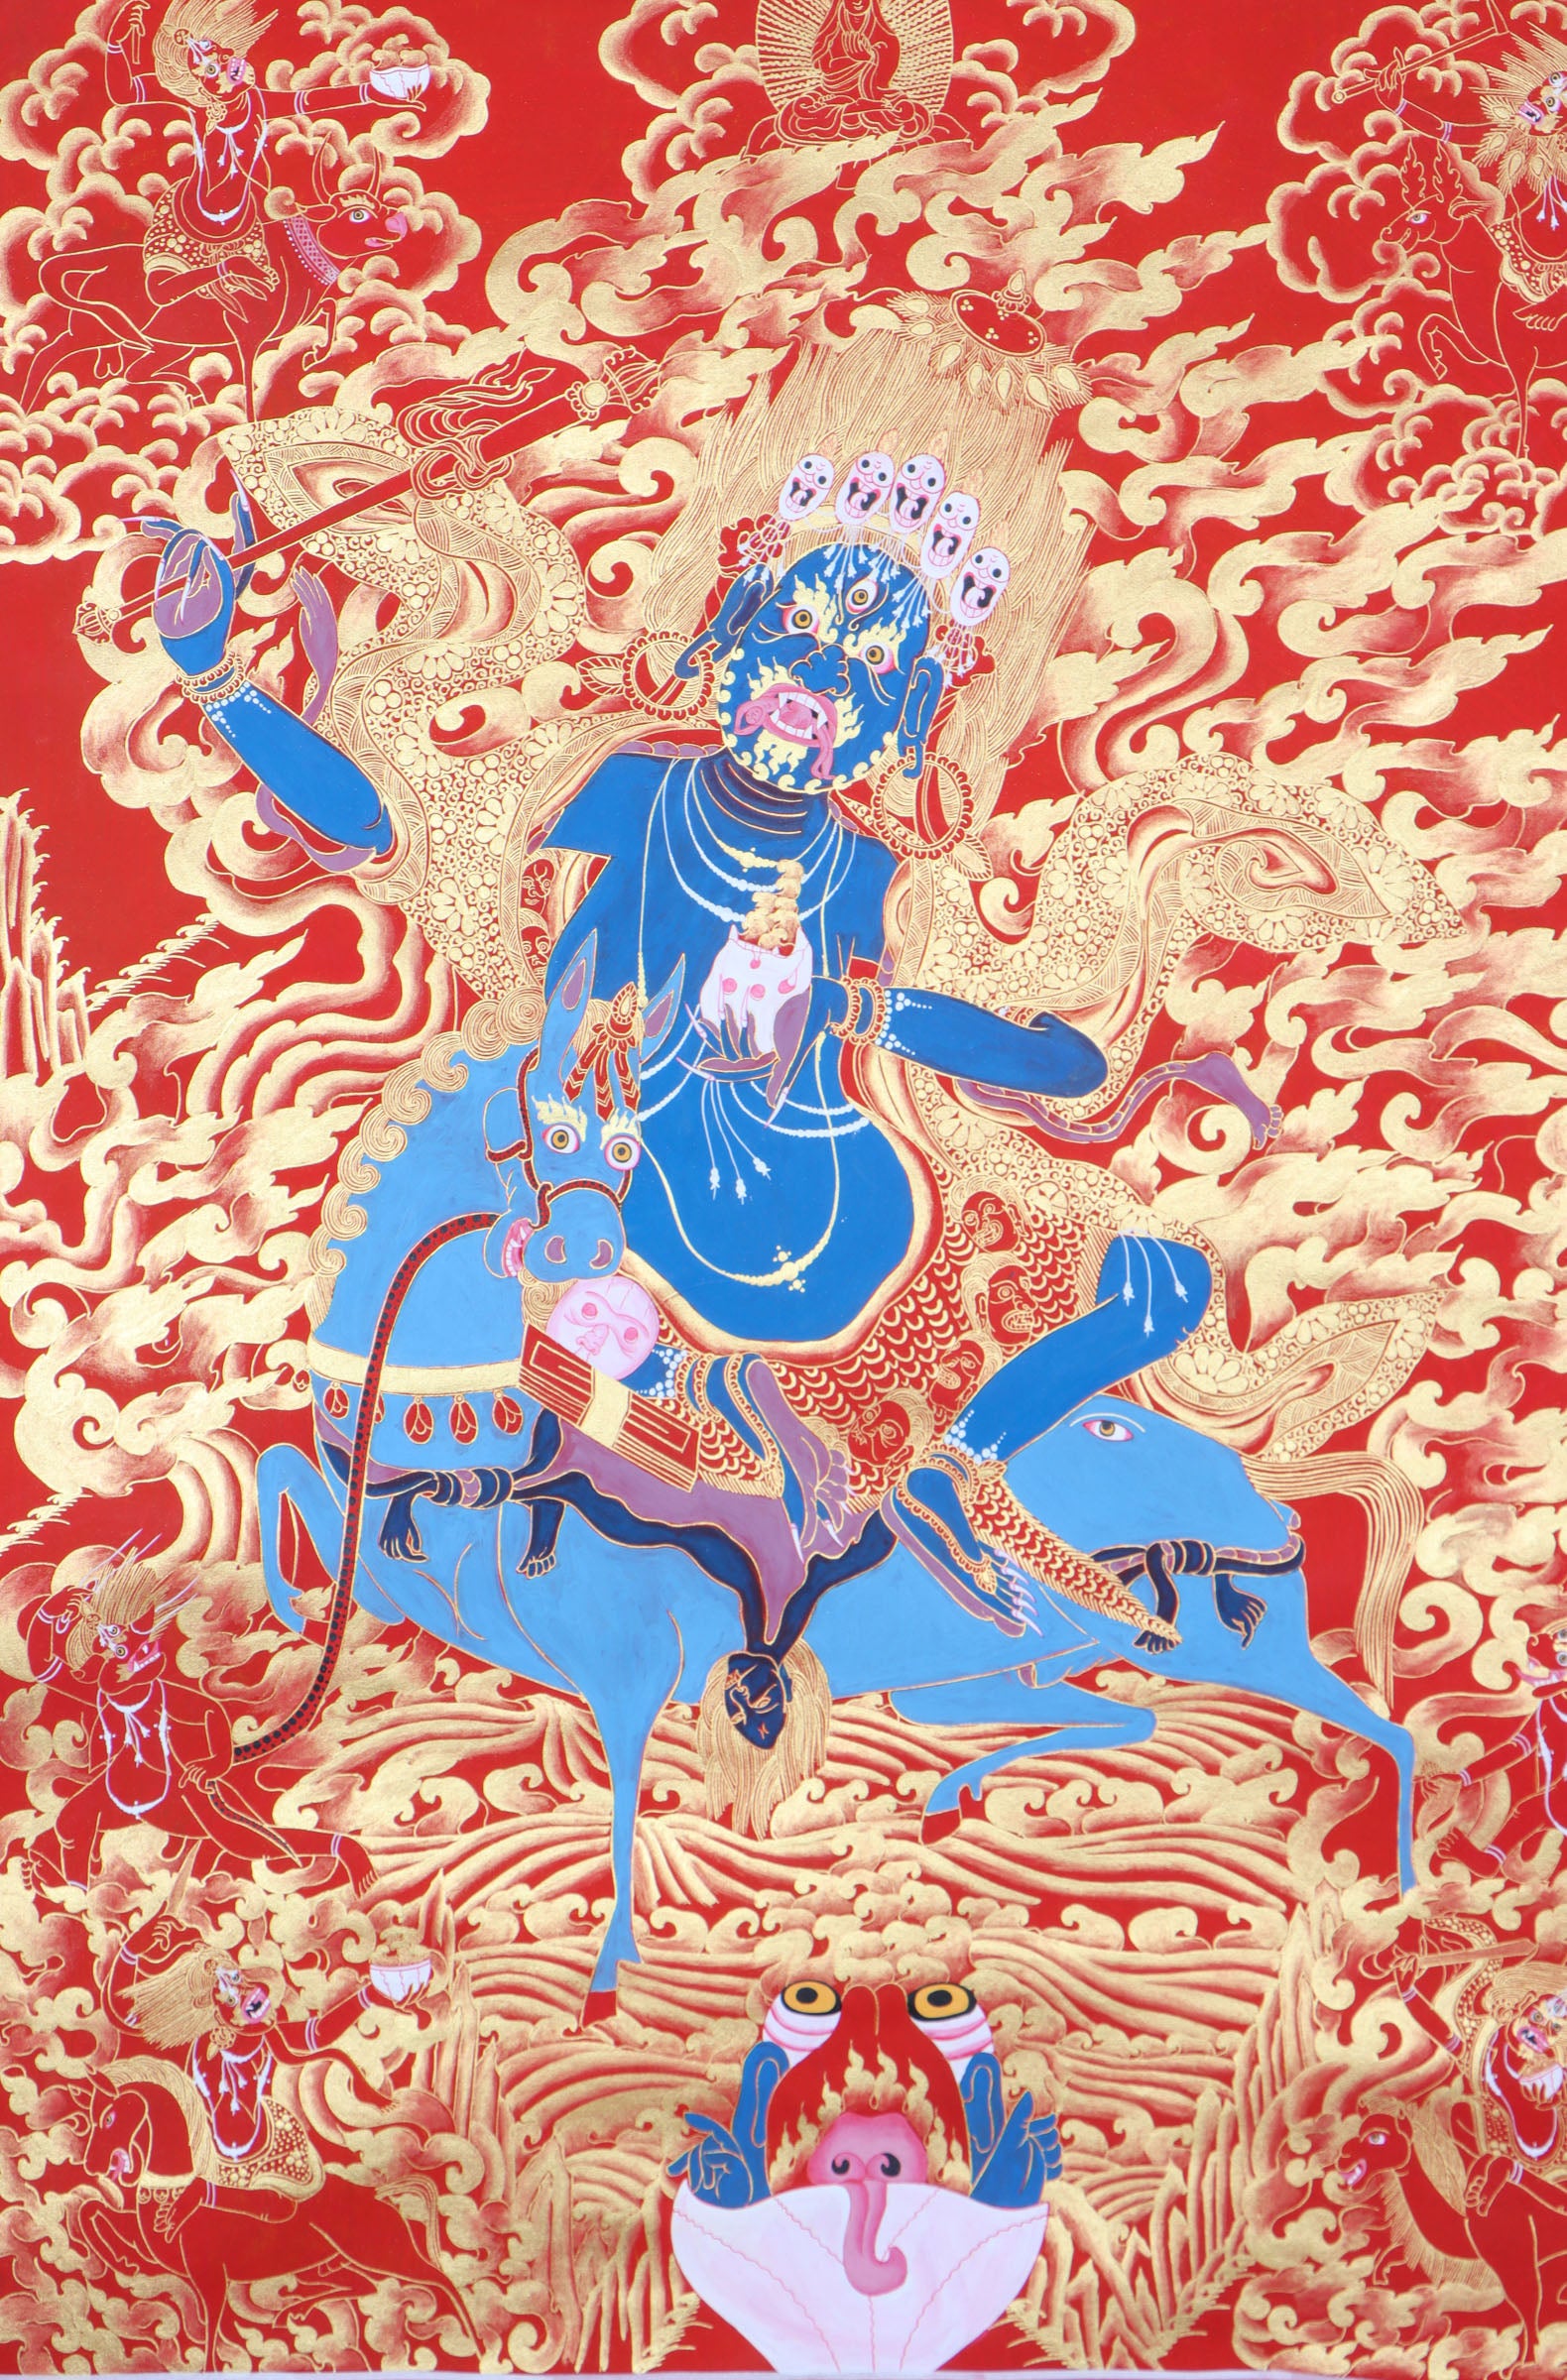 Palden Lhamo Thangka Painting for spirituality.